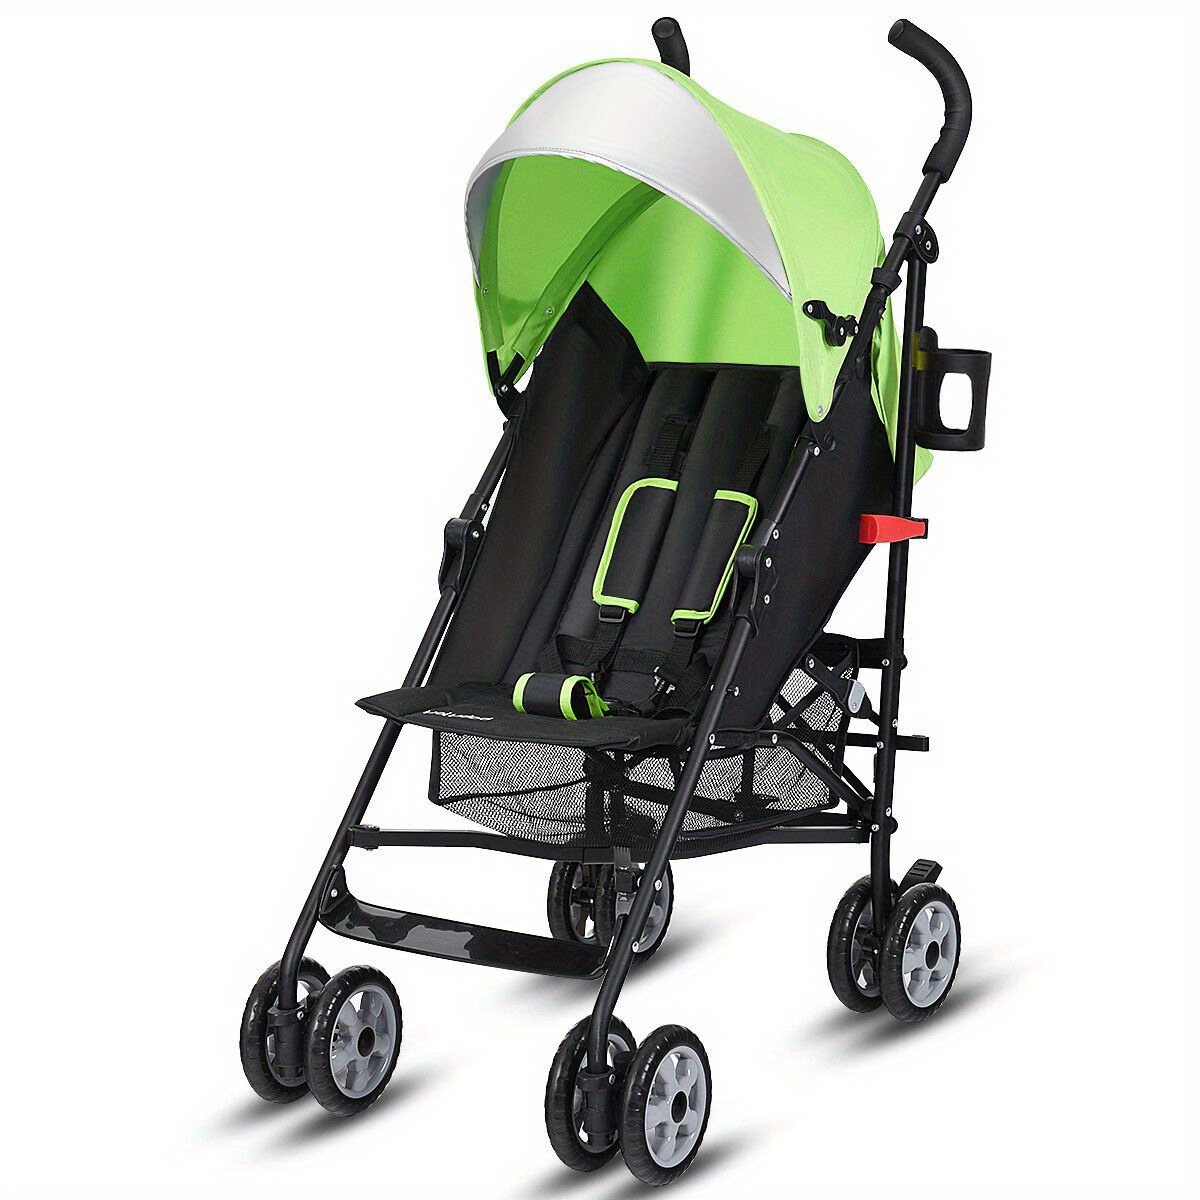 

Maxmass Folding Lightweight Baby Toddler Umbrella Travel Stroller W/ Storage Basket New